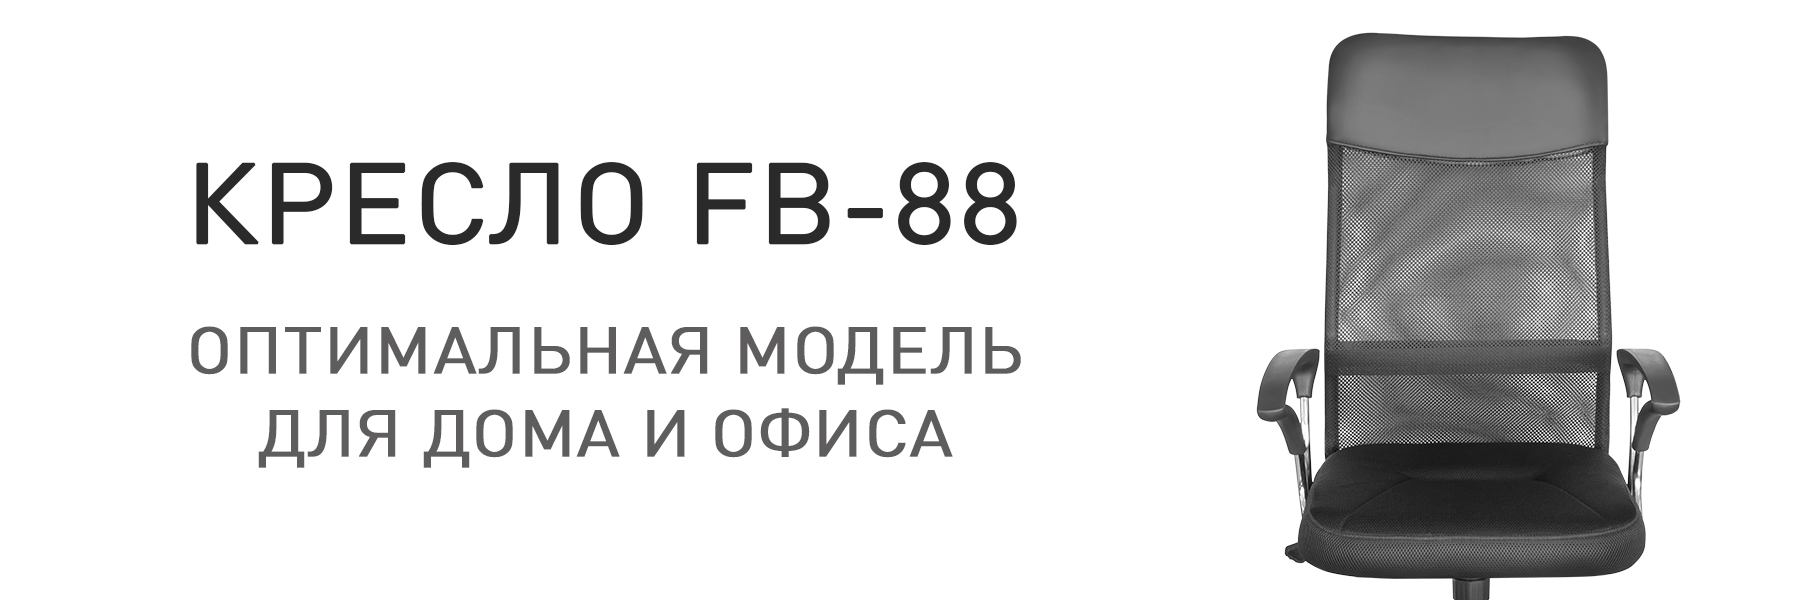 FB-88-МП-ТВ-947668-2.jpg